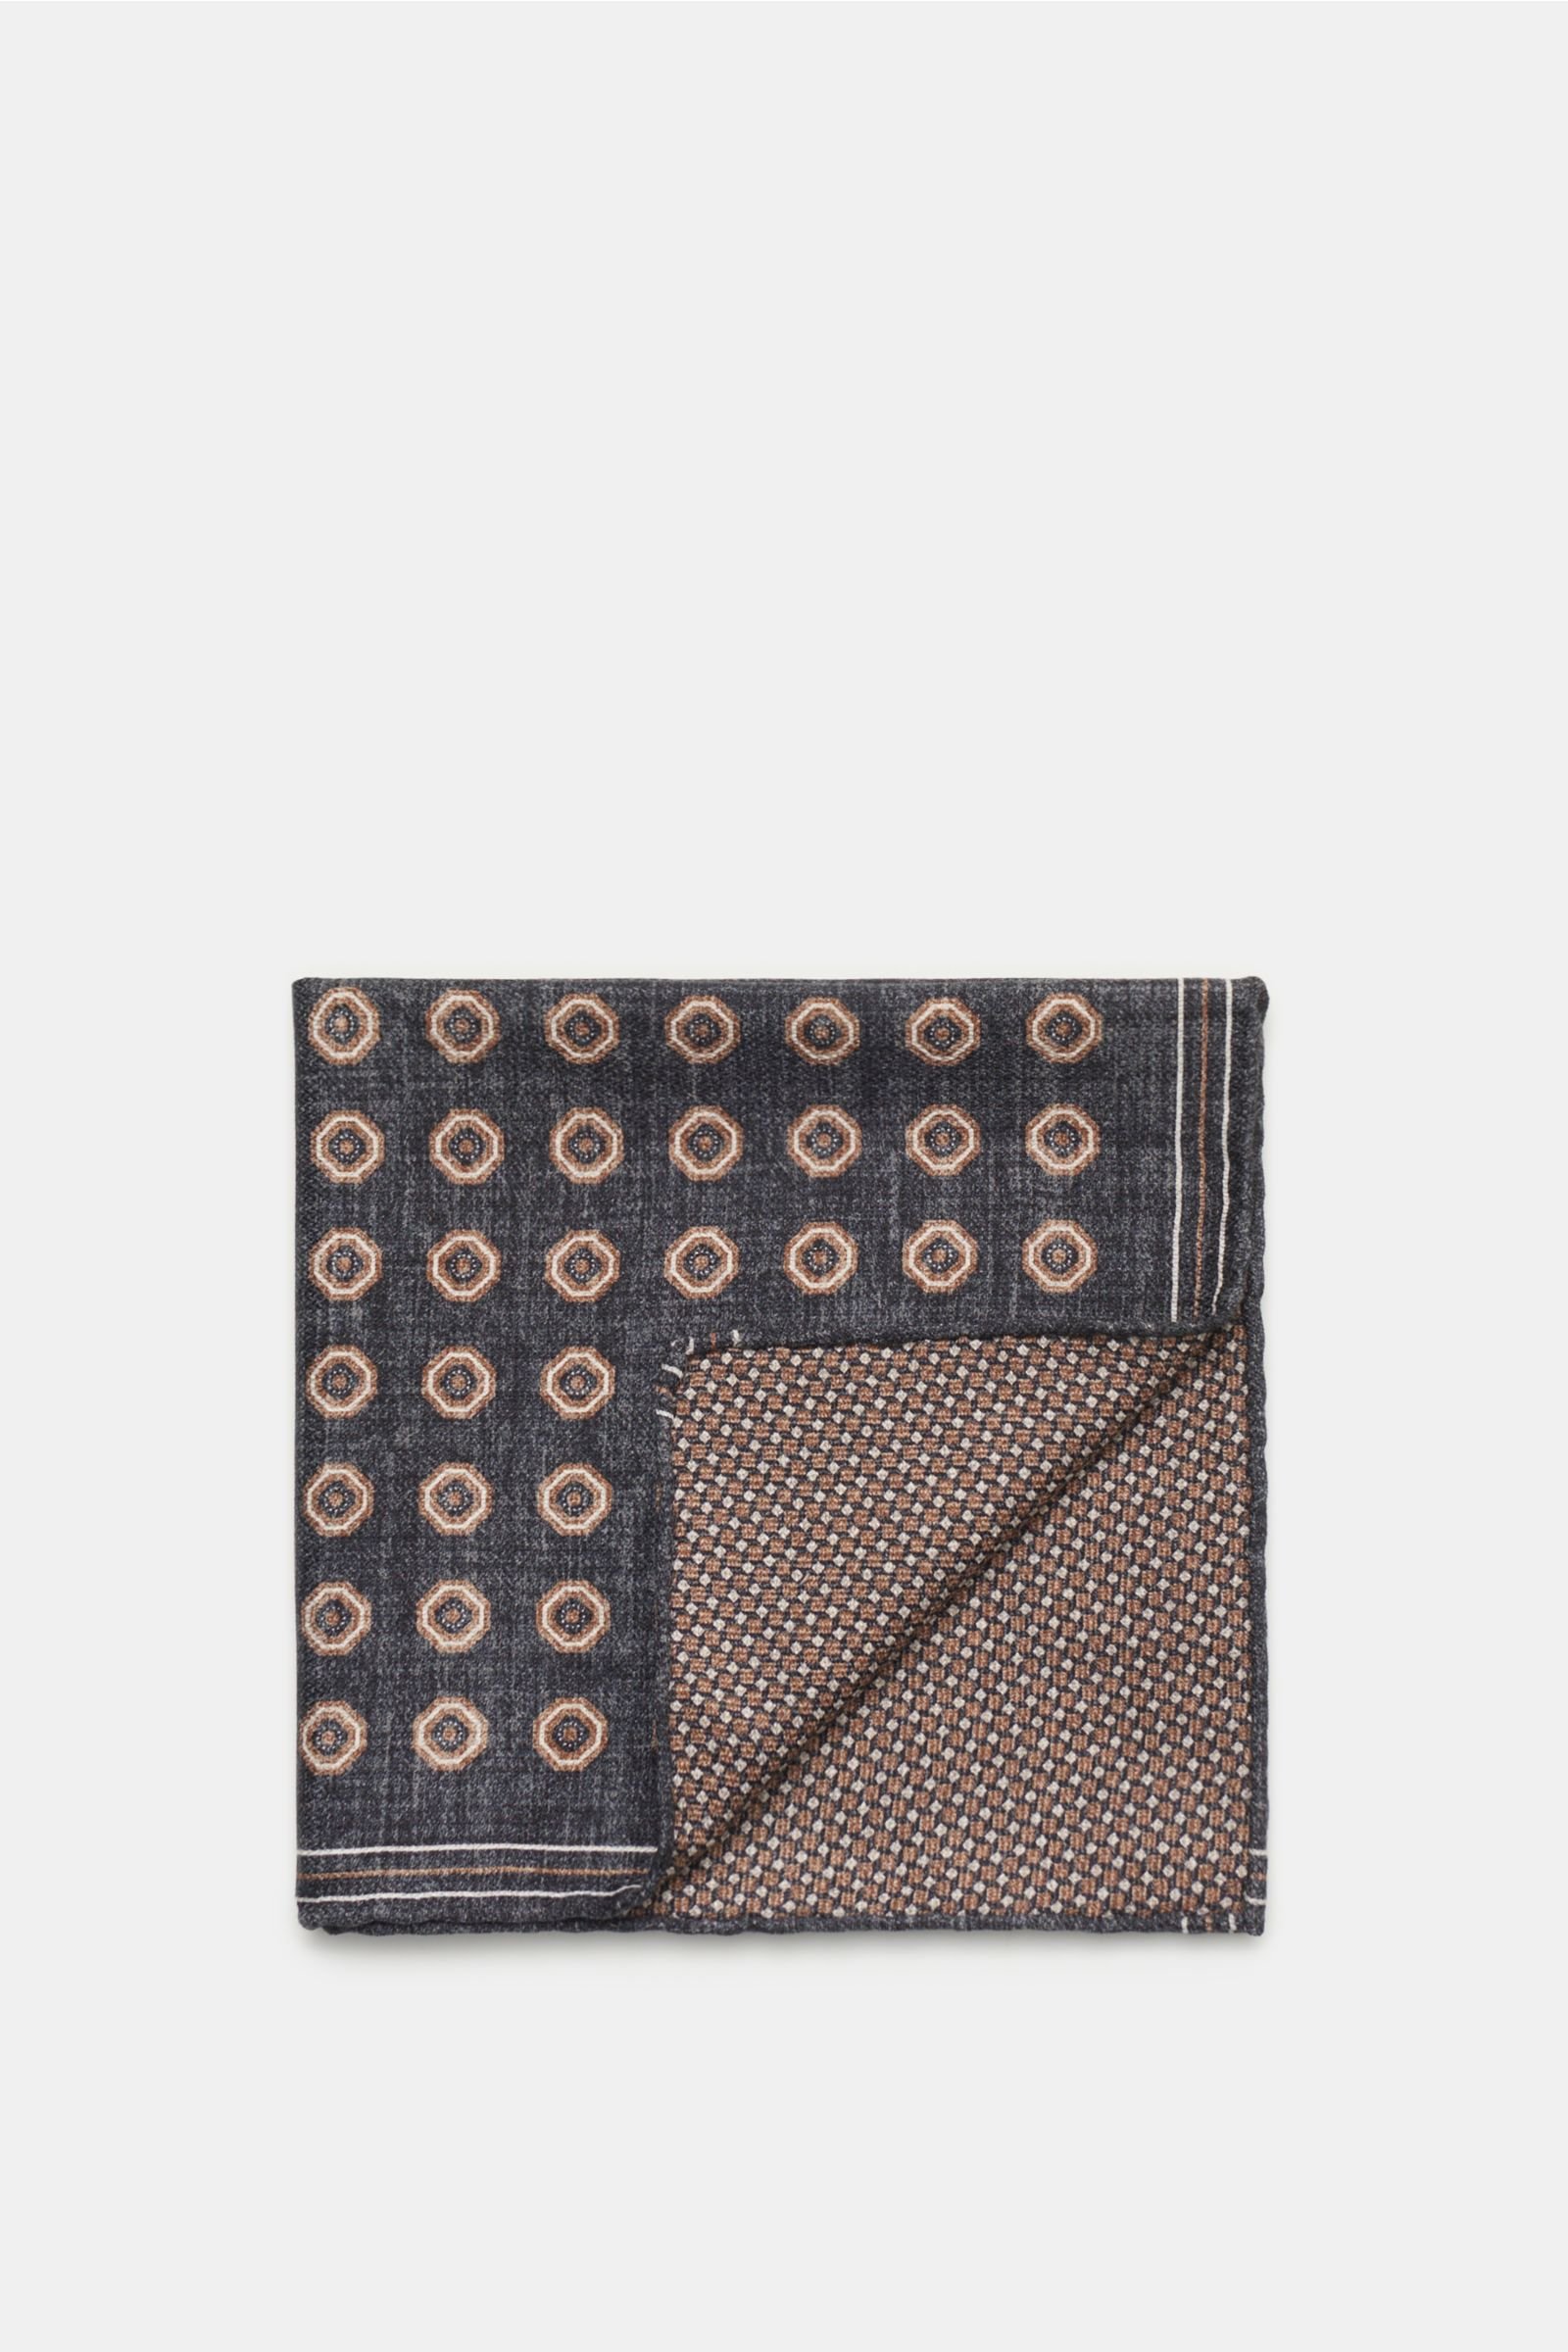 Pocket square dark grey/grey-brown patterned